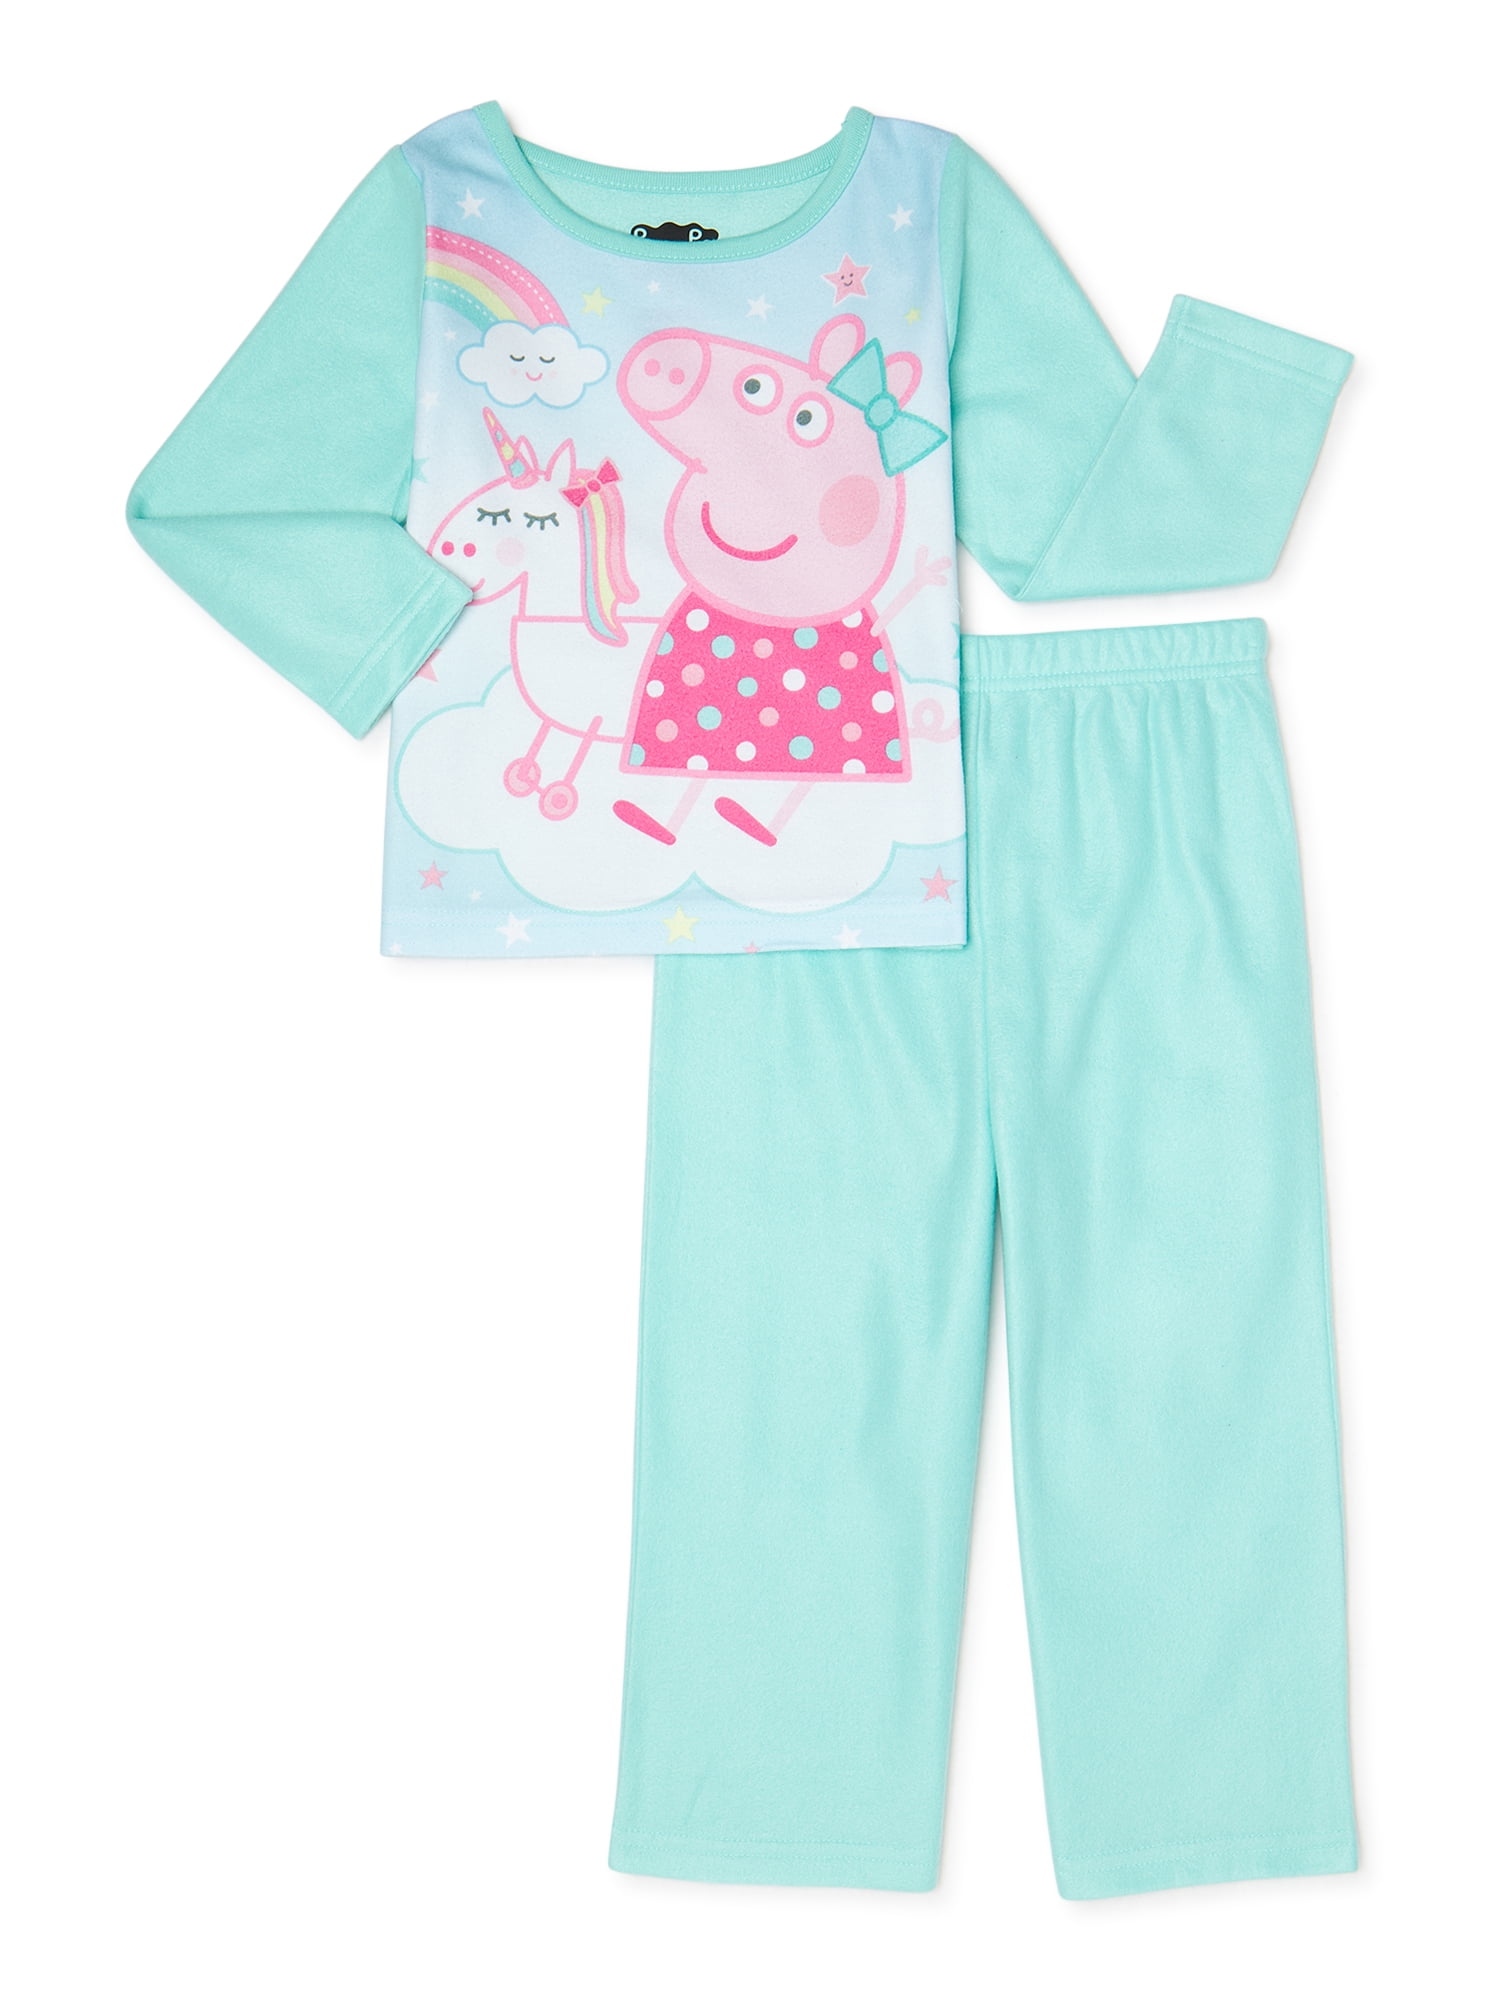 Peppa Pig Toddler Girls Pink Blue Play Cotton 2 Pack Pajamas Size 3T 